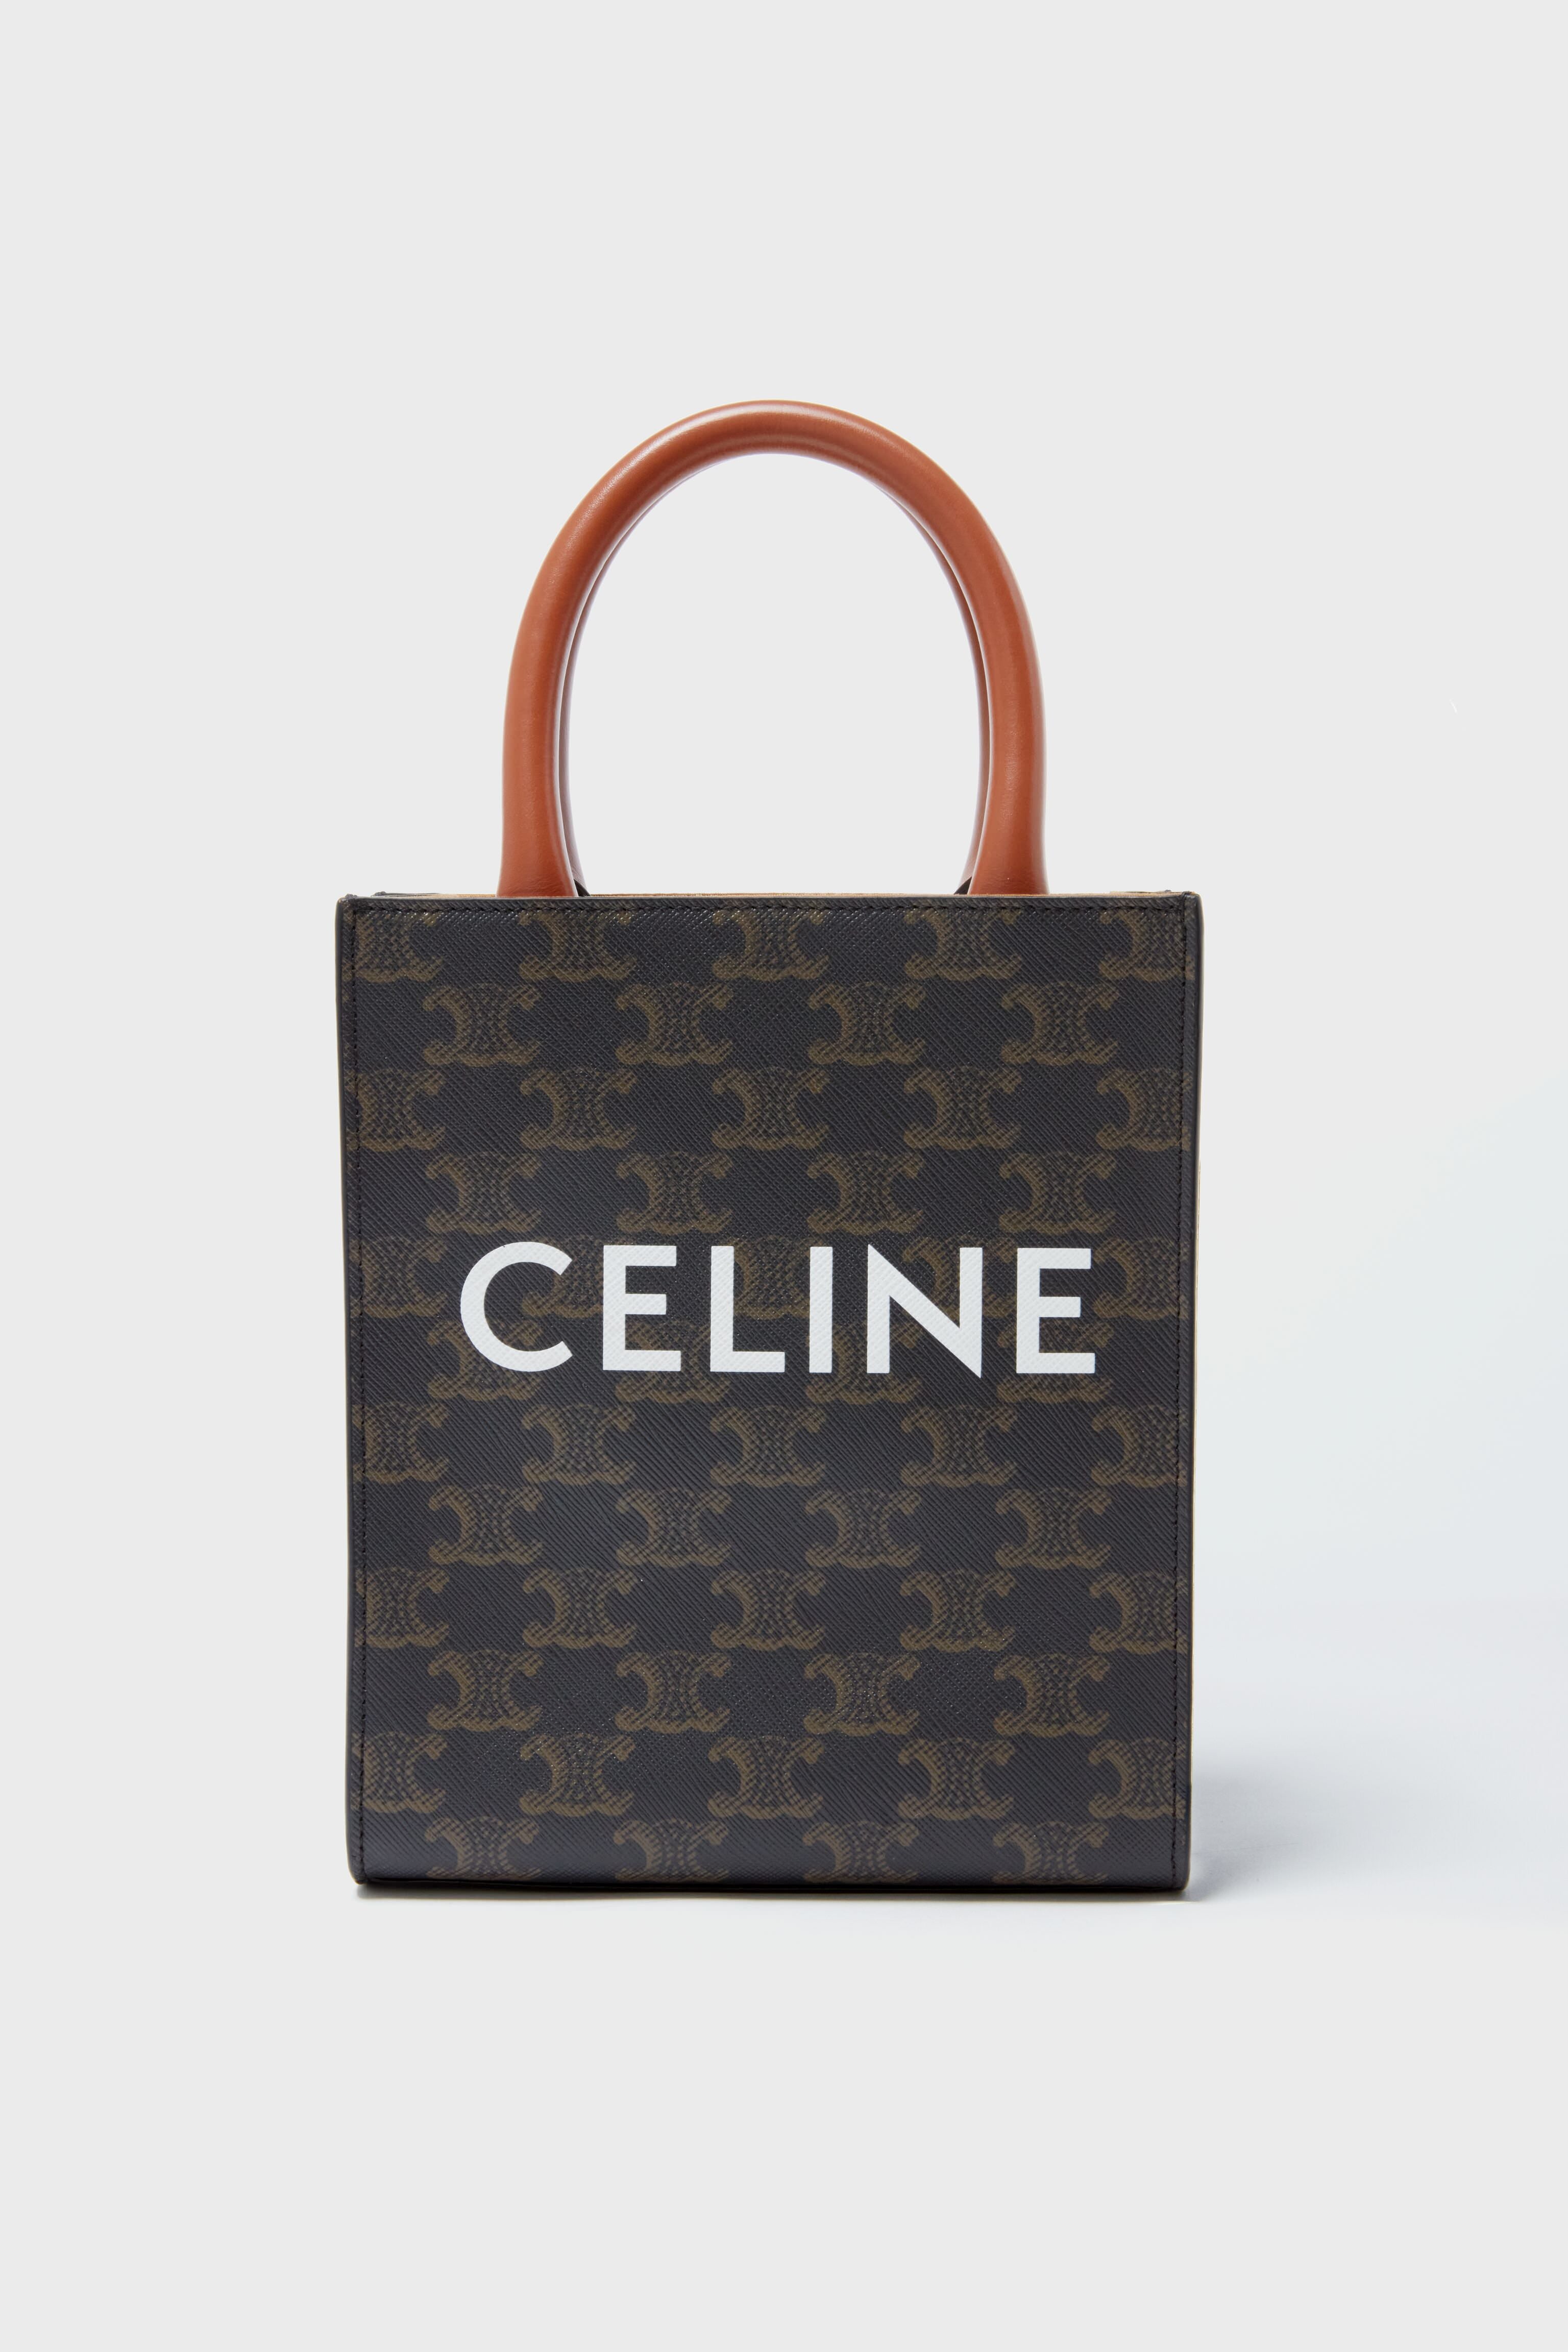 Celine Cream/Black Canvas and Leather Cabas Phantom Tote Celine